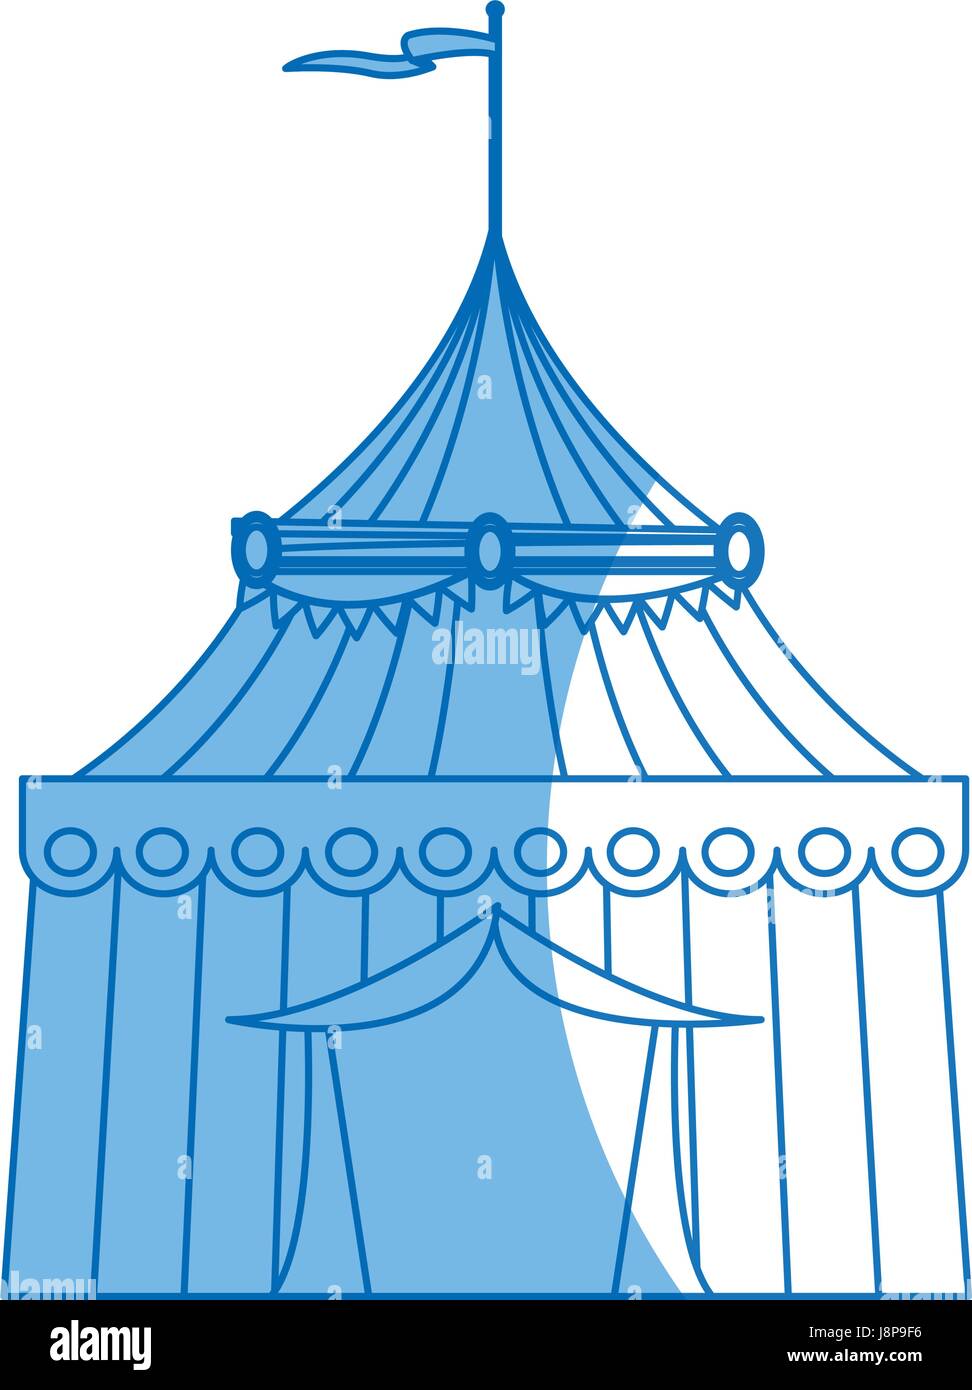 gestreifte flanierende Zirkuszelt Festzelt mit Fahne-Vektor-illustration Stock Vektor